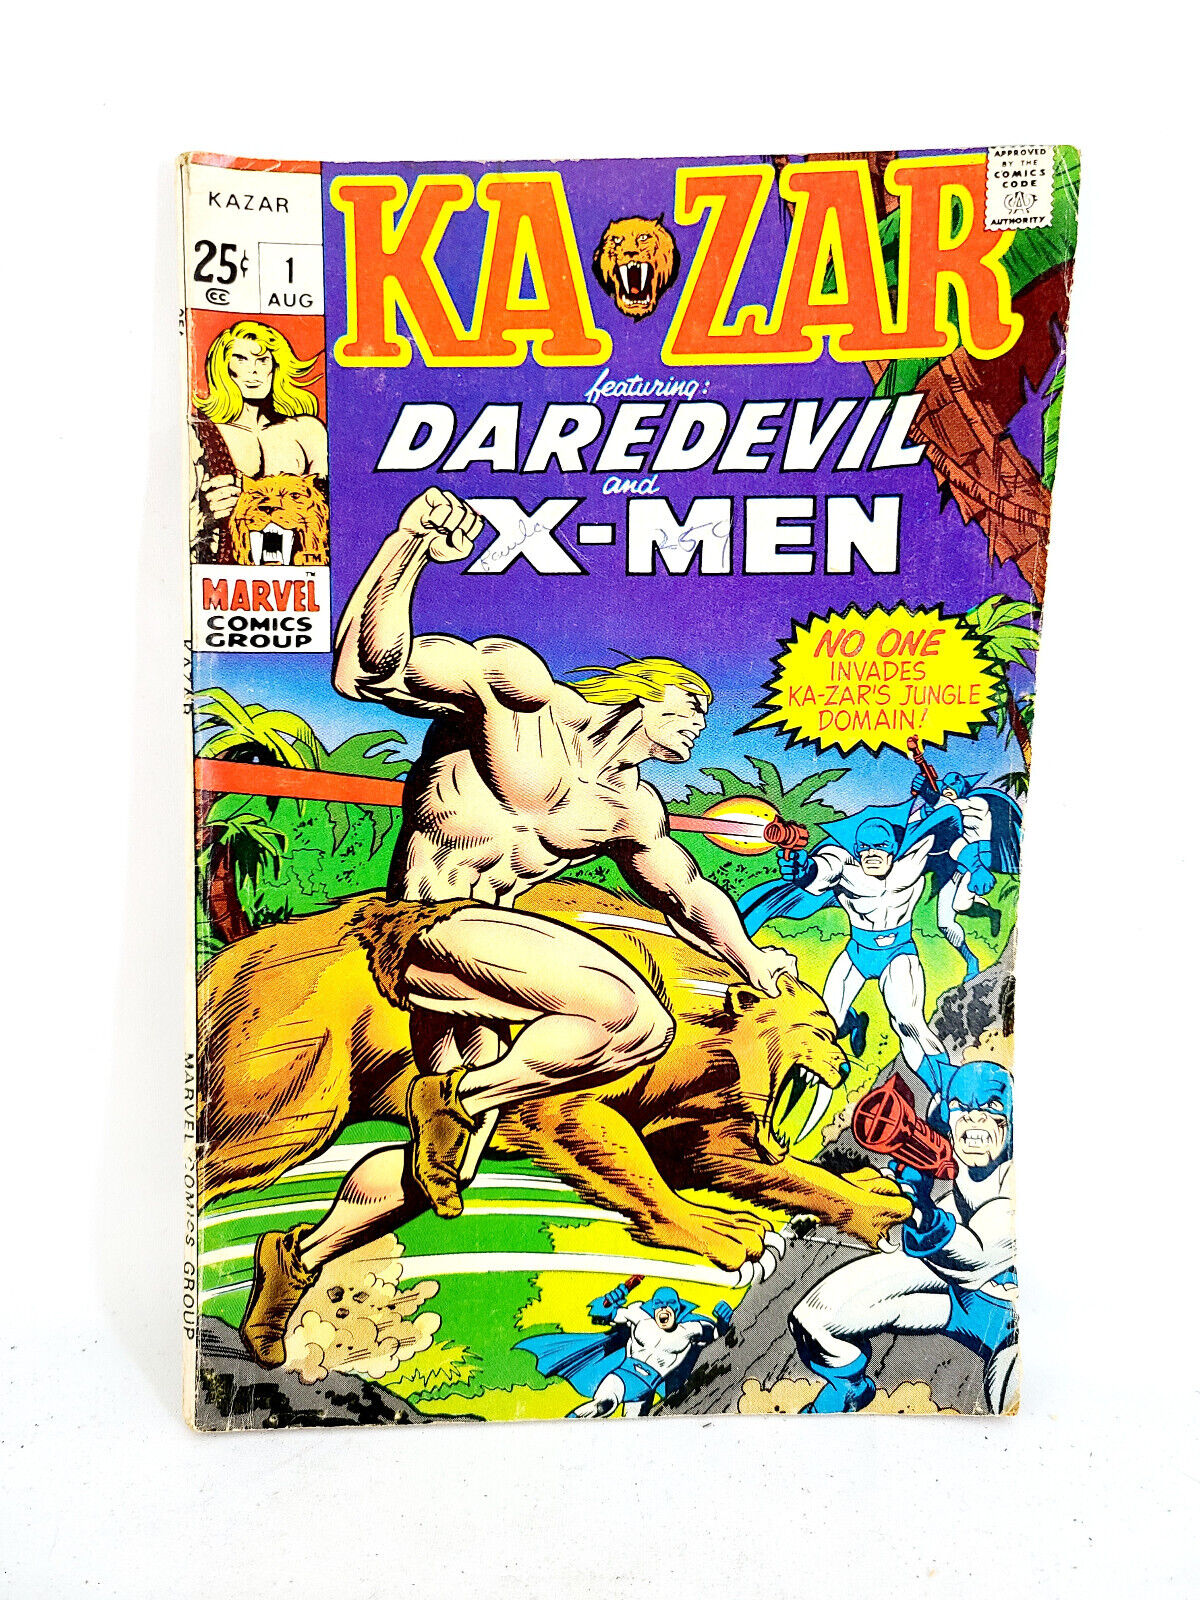 KAZAR #1 FEATURING DAREDEVIL AND THE X MEN MARVEL COMICS (1970)